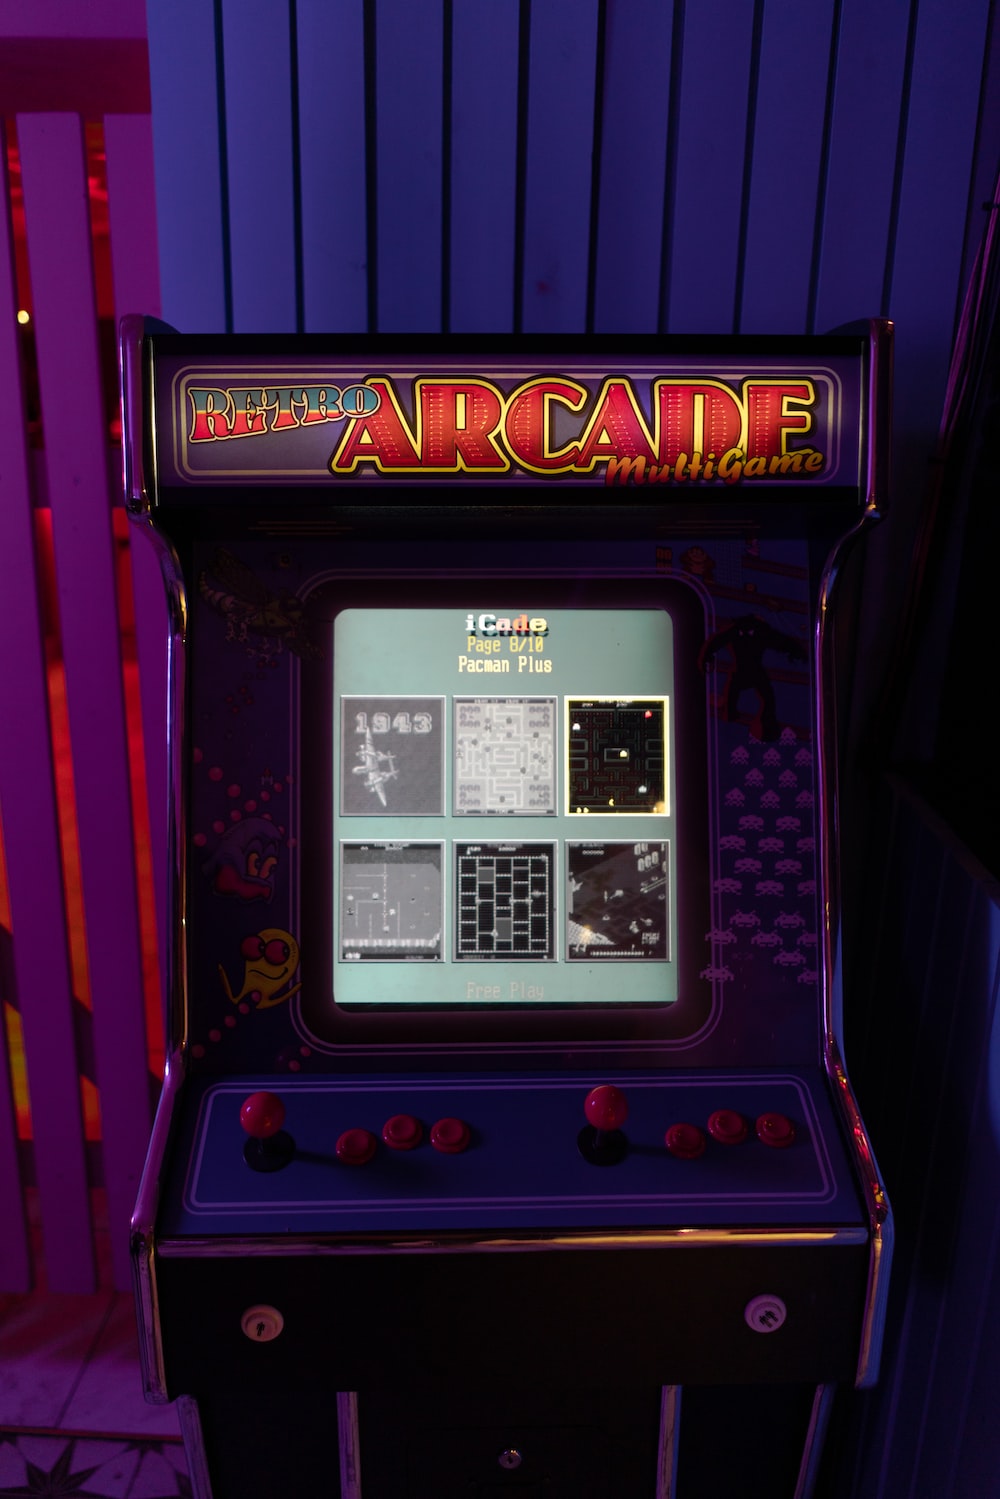 80S Arcade Wallpapers